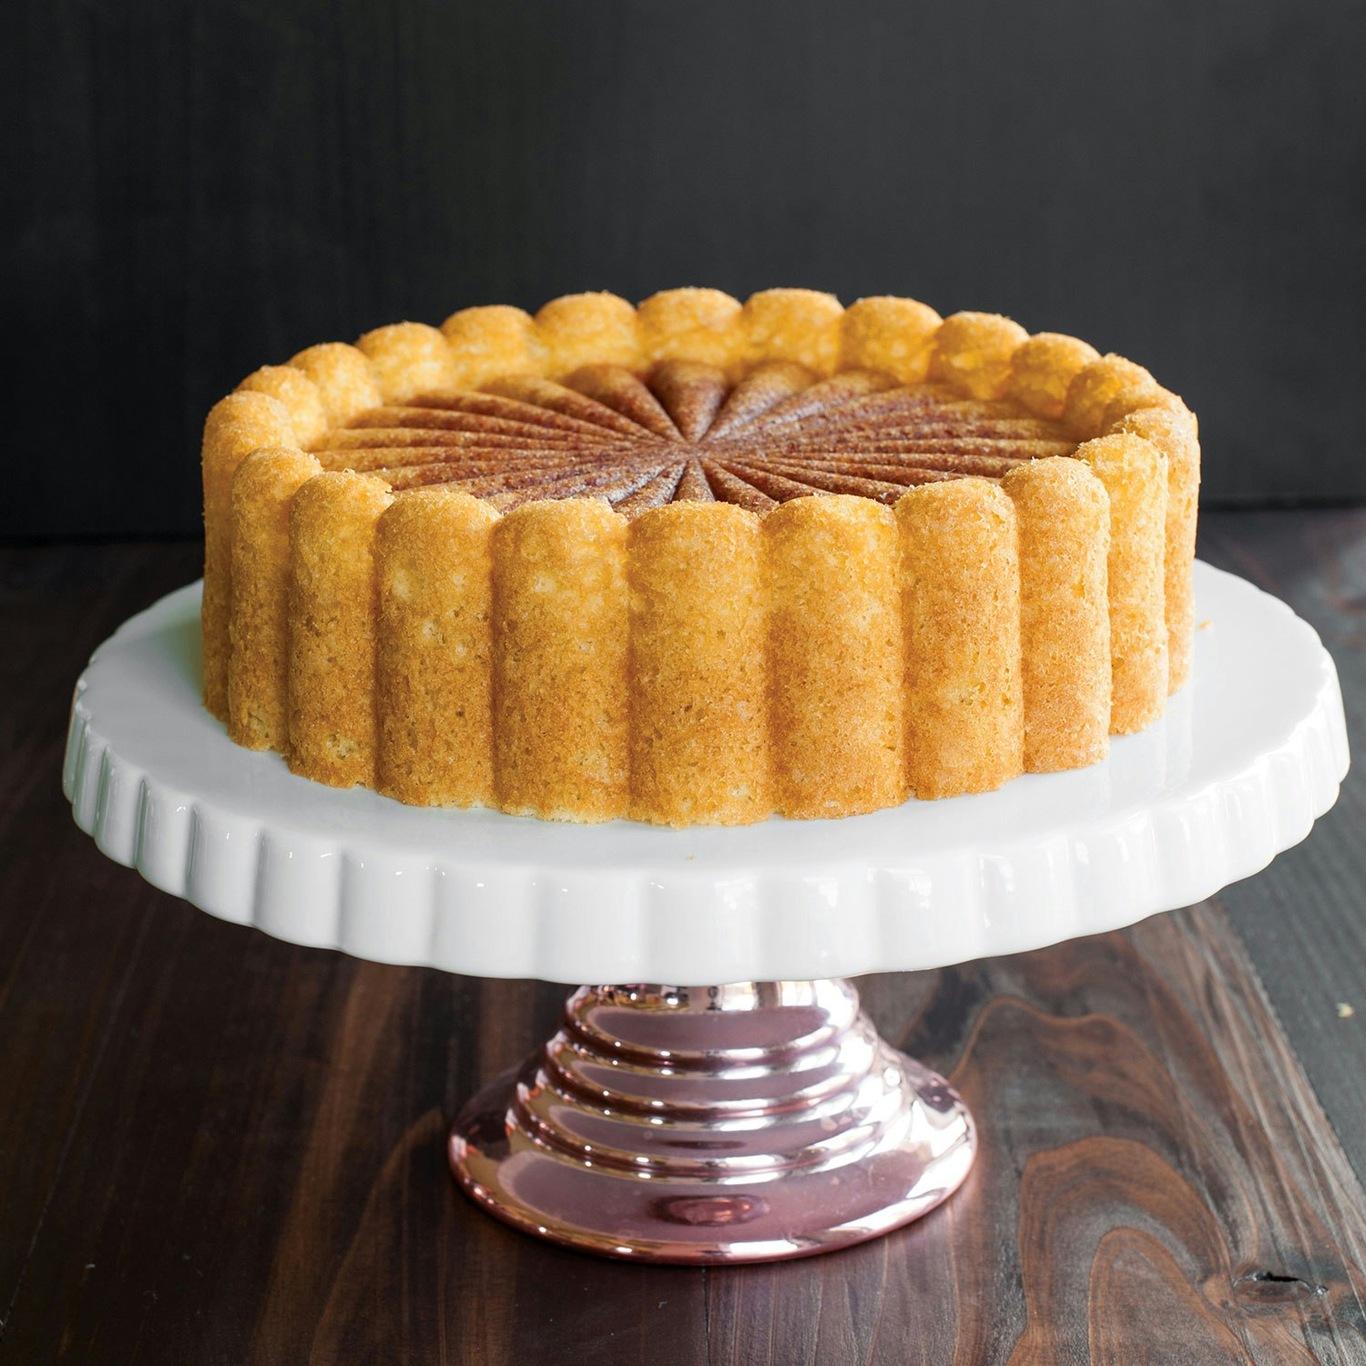 Buy NordicWare Covered Cake Pan